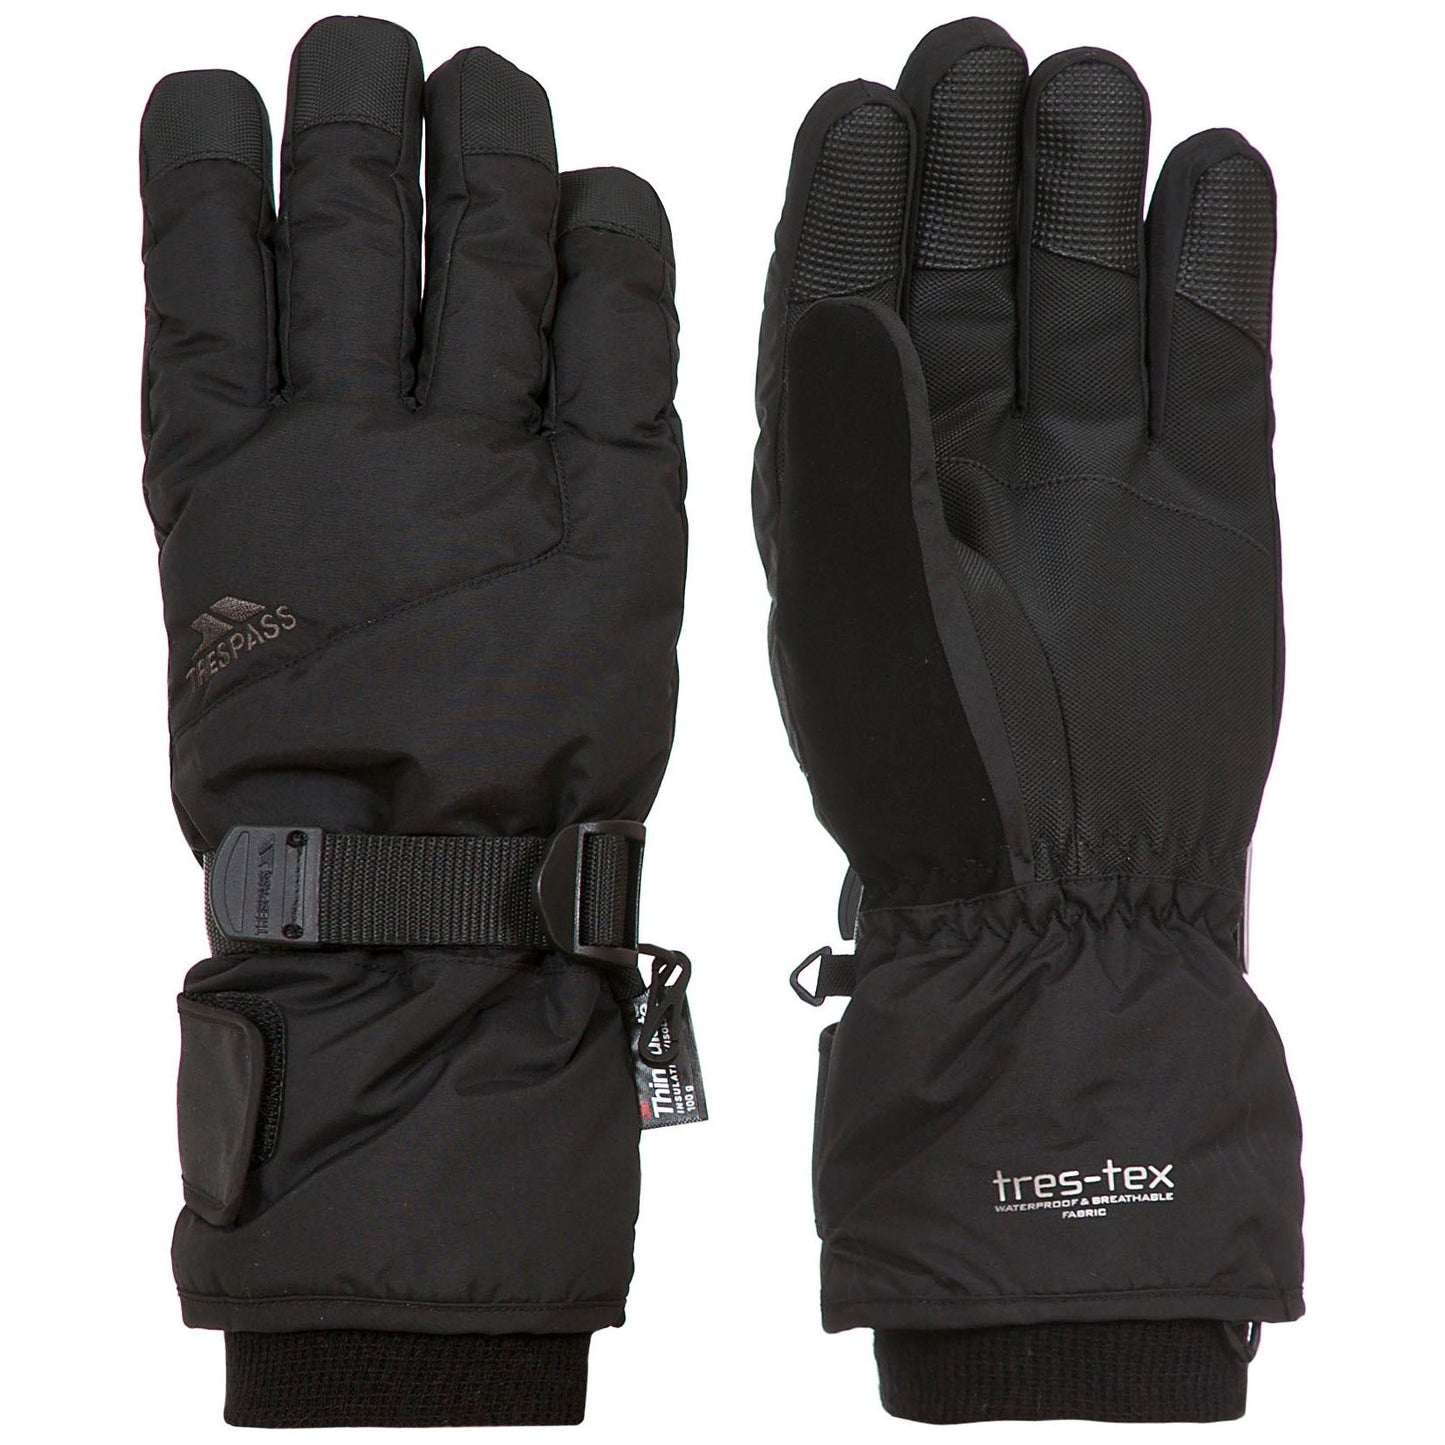 Ergon 2 - Unisex Kids Ski Gloves - Black